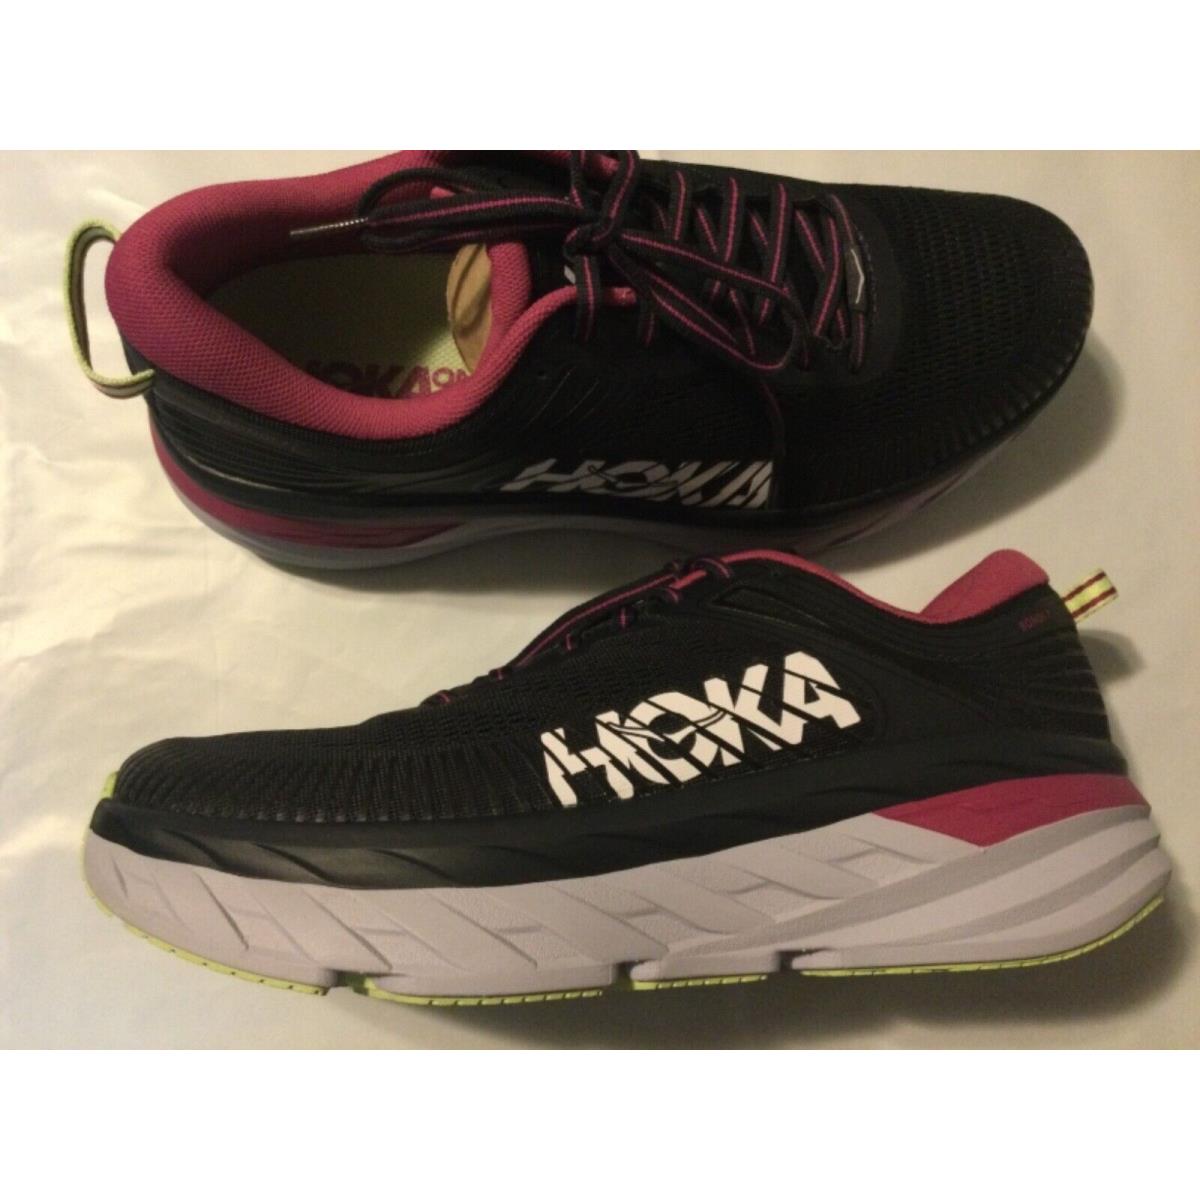 Hoka shoes One One Bondi - Black 8